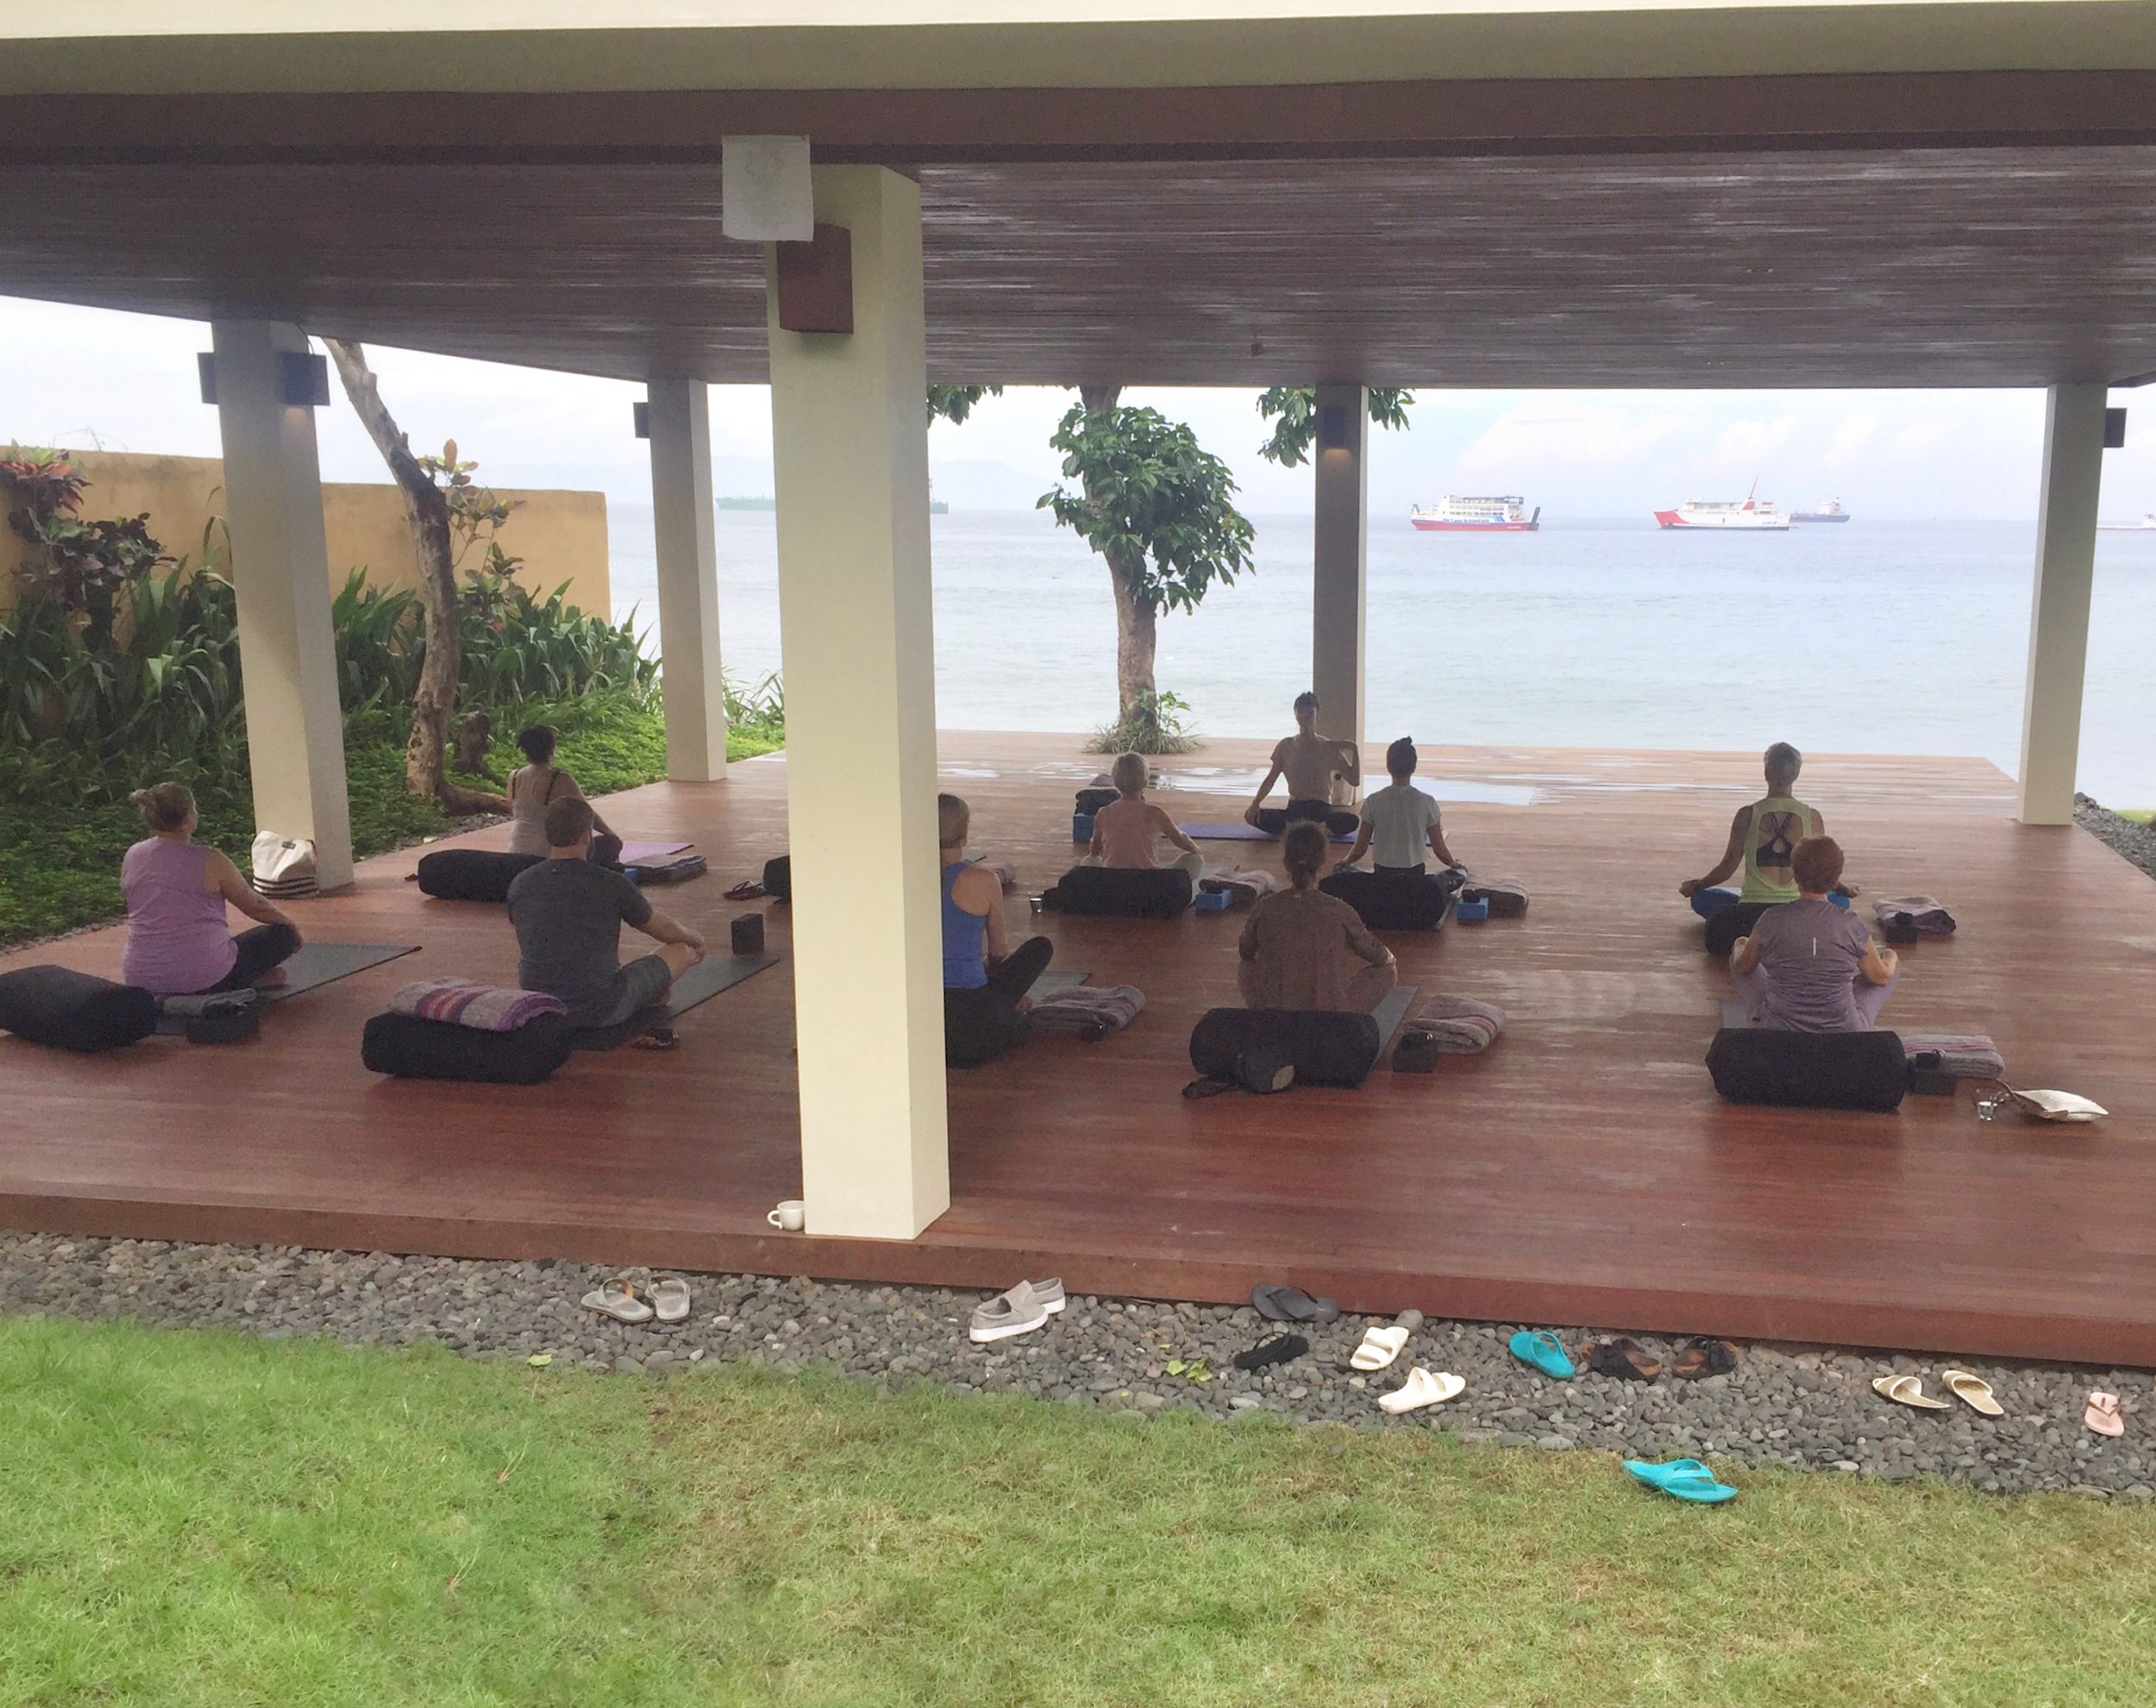 The hotel yoga pavilion by the sea | EAT.PRAY.MOVE Yoga | Bali, Indonesia